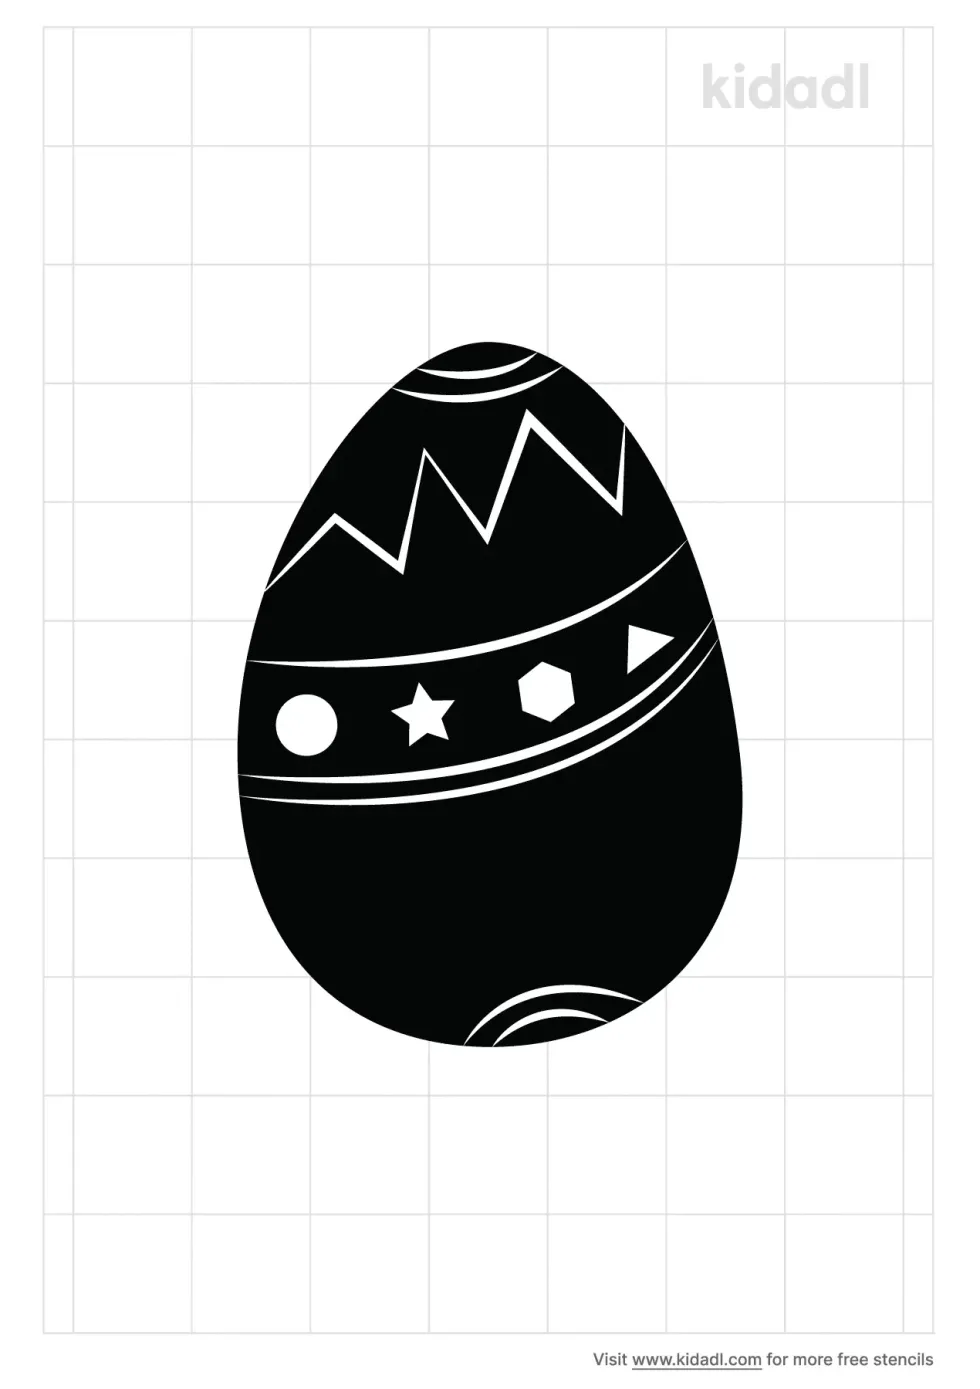 Cracked Egg Stencil